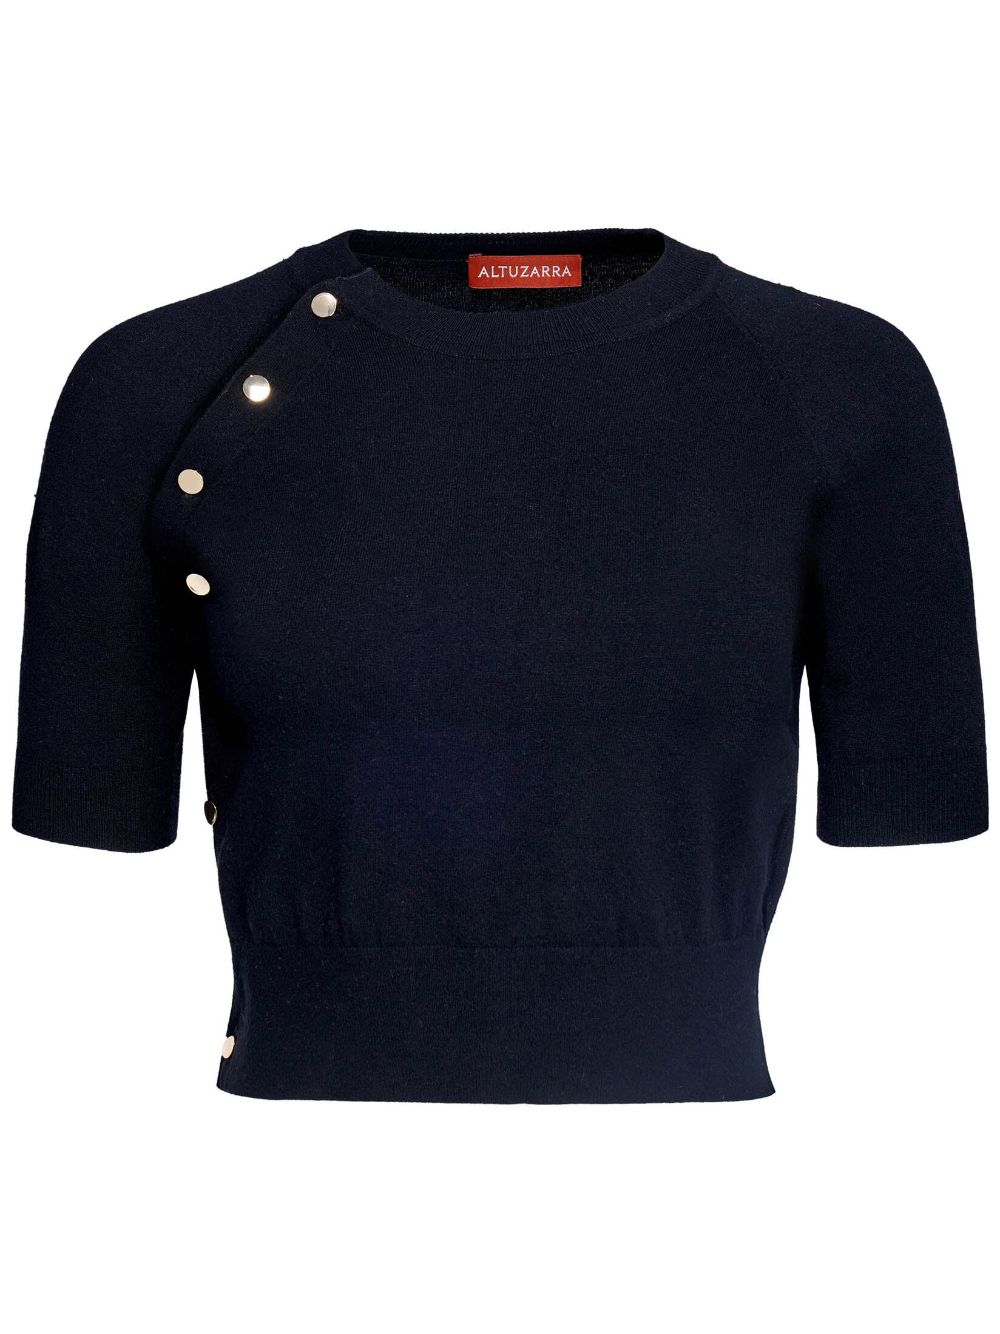 Altuzarra short-sleeve knitted crop top - Black von Altuzarra